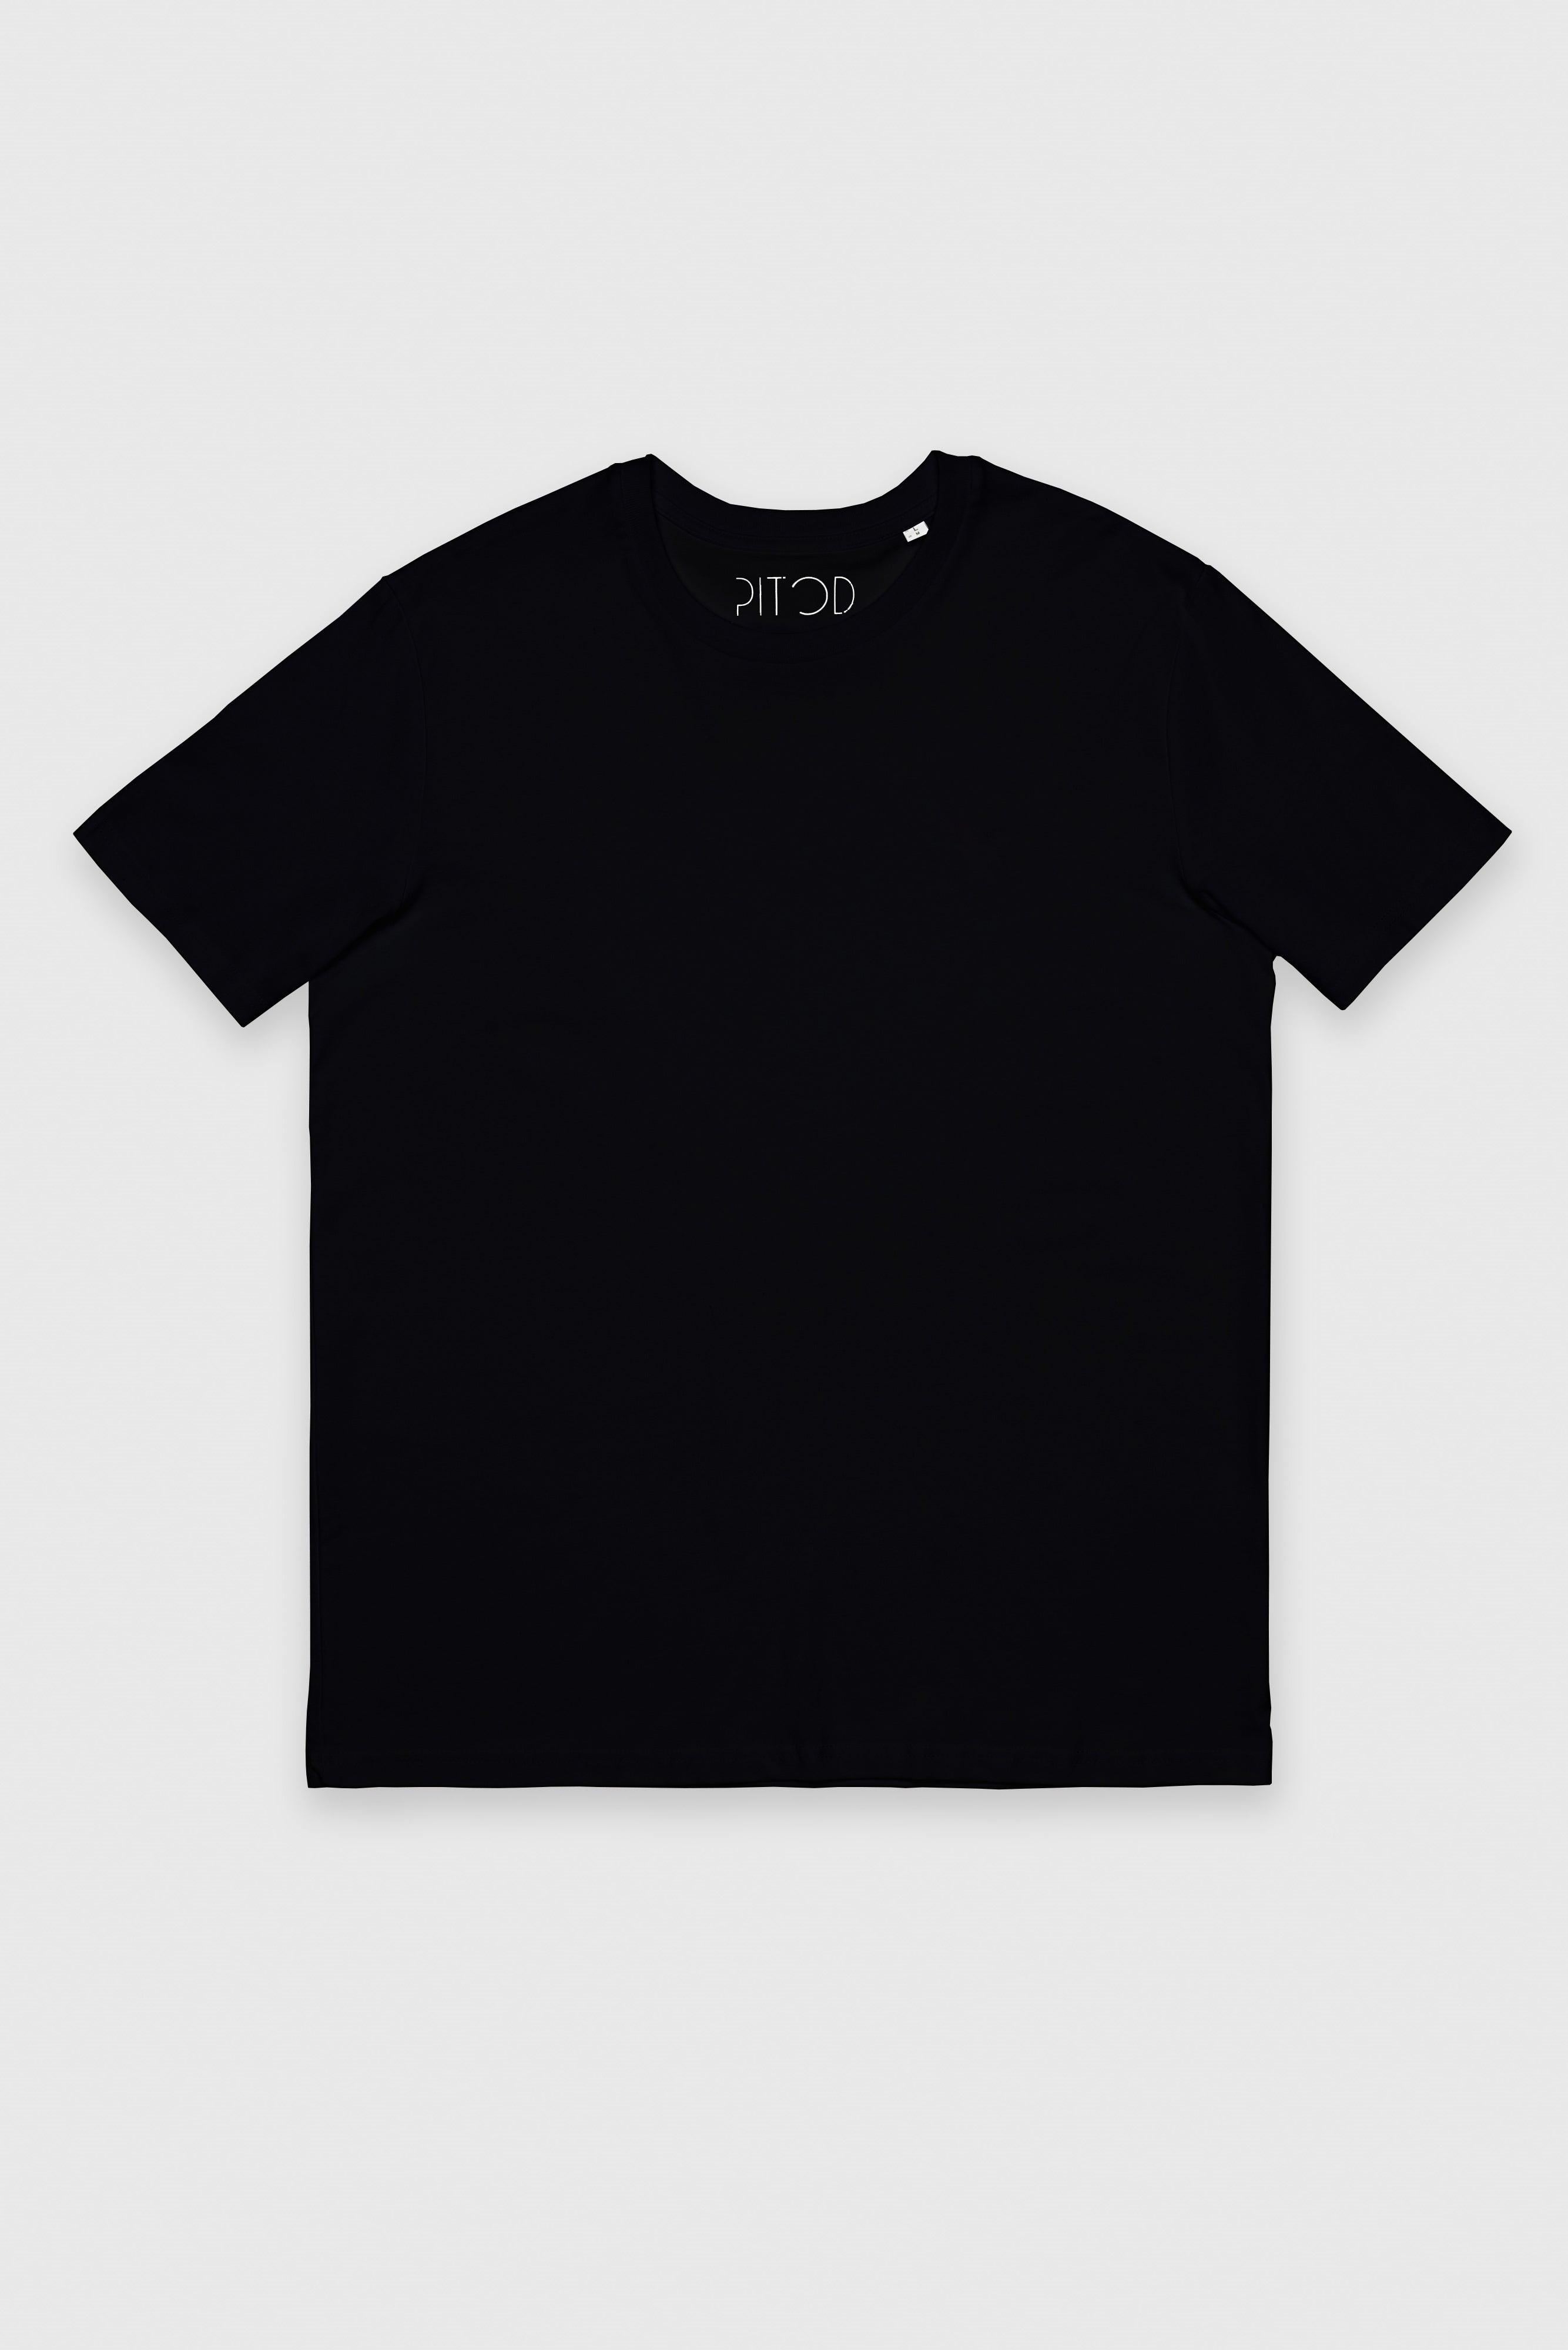 Pitod T-Shirt - 5 Pack | T-Shirts | pitod.com